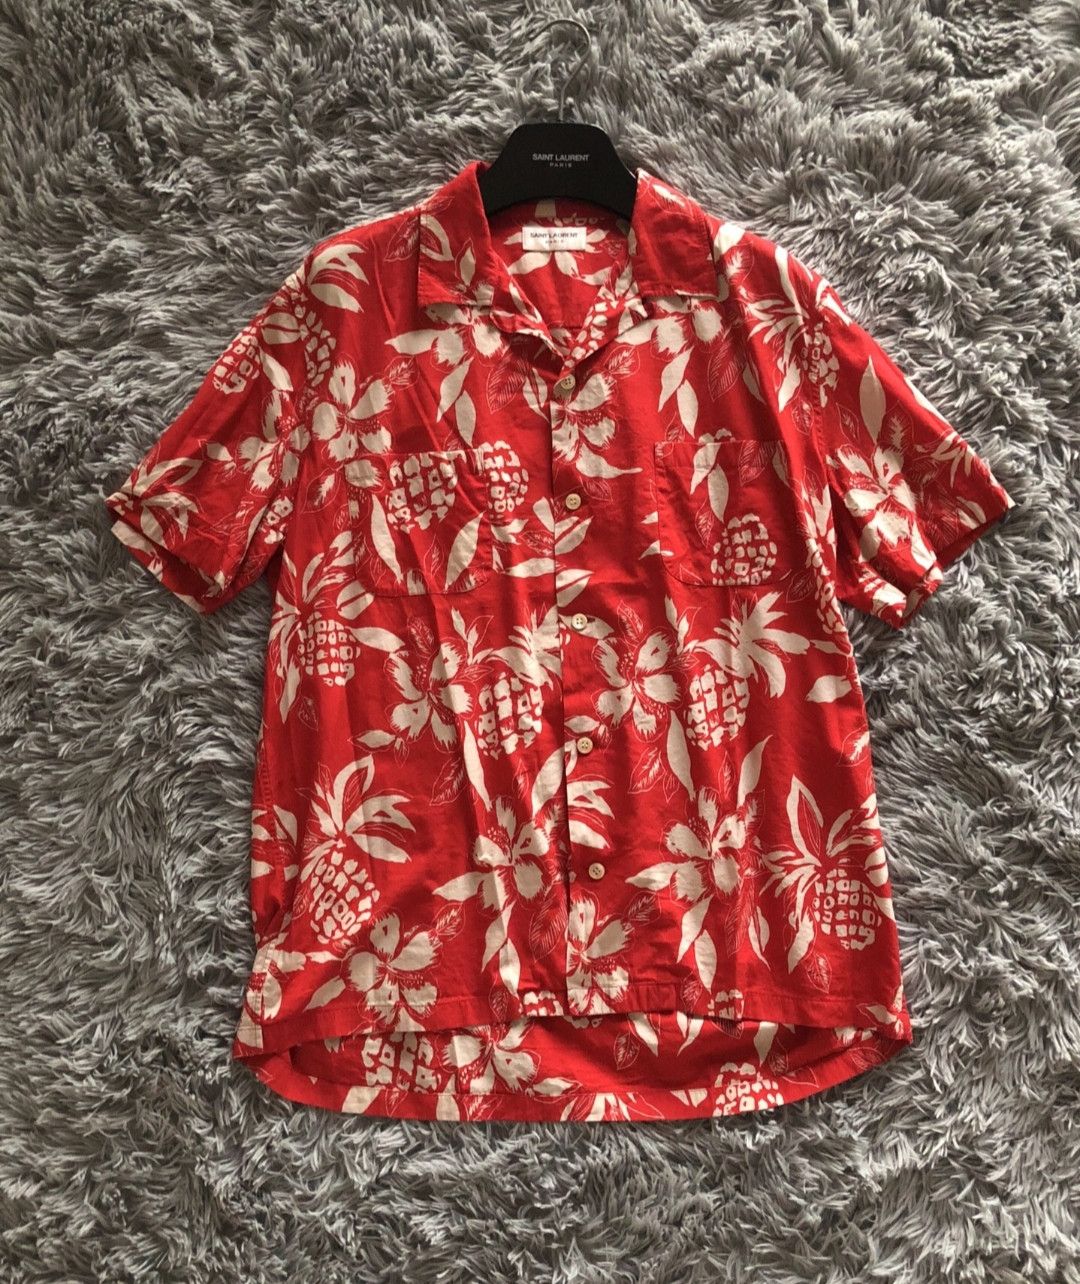 Saint Laurent Paris Saint Laurent Hawaiian Shirt | Grailed